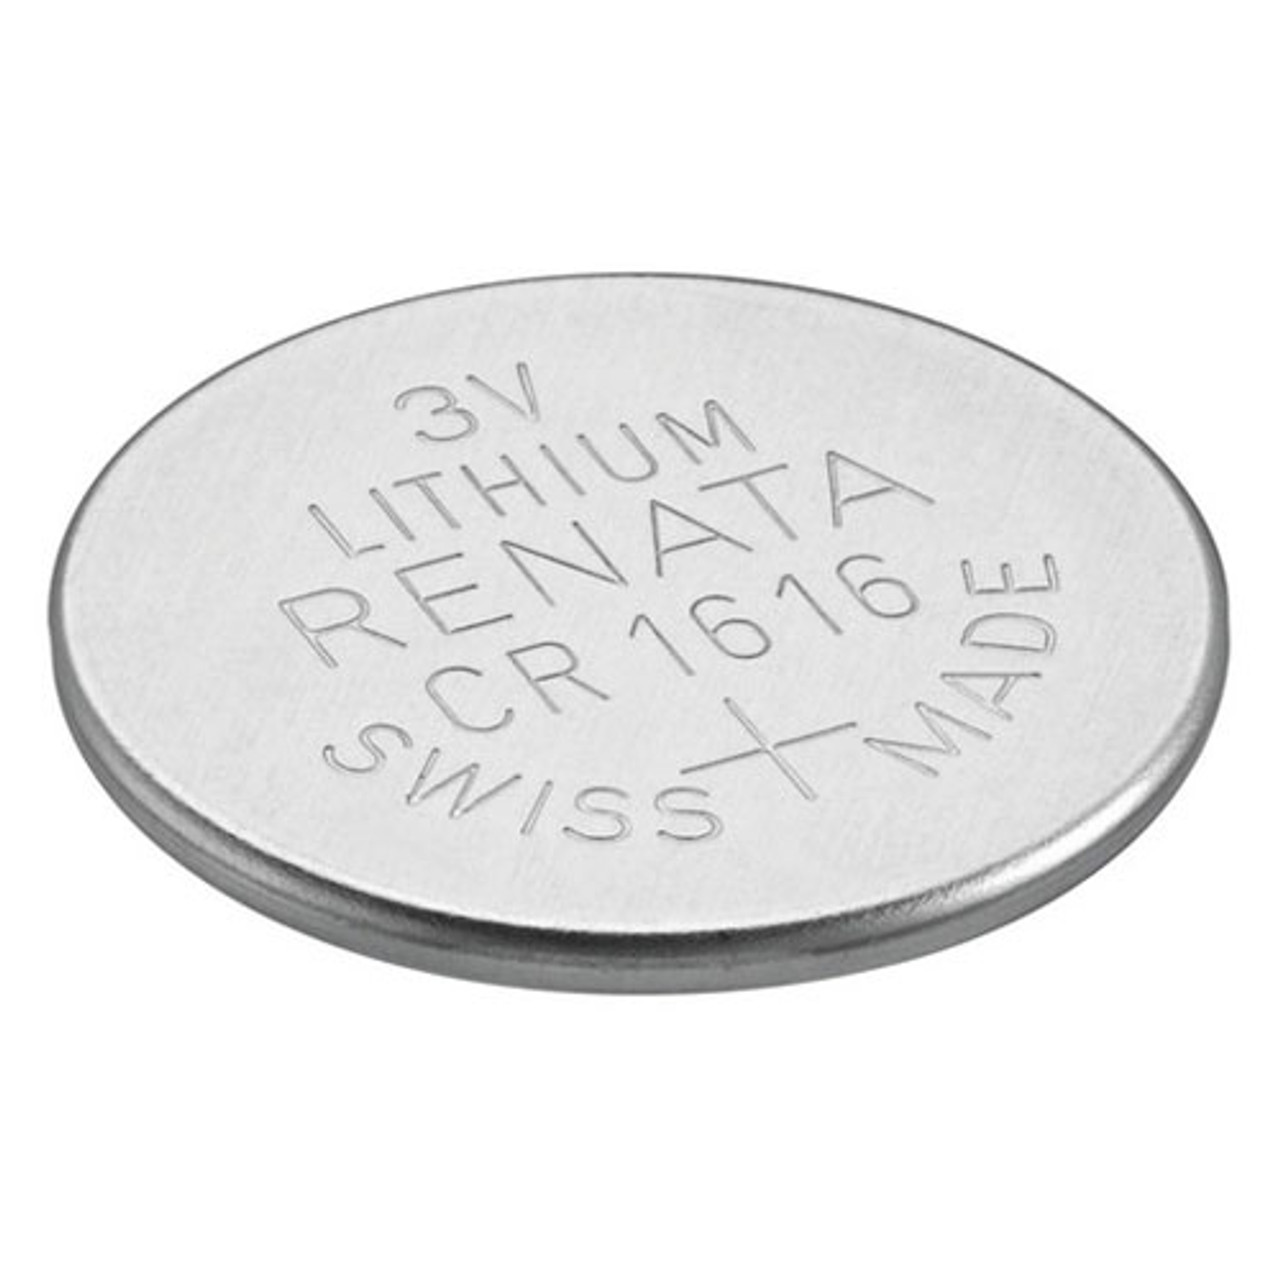 Renata CR1616 3V Lithium Button Cells Battery - Retail